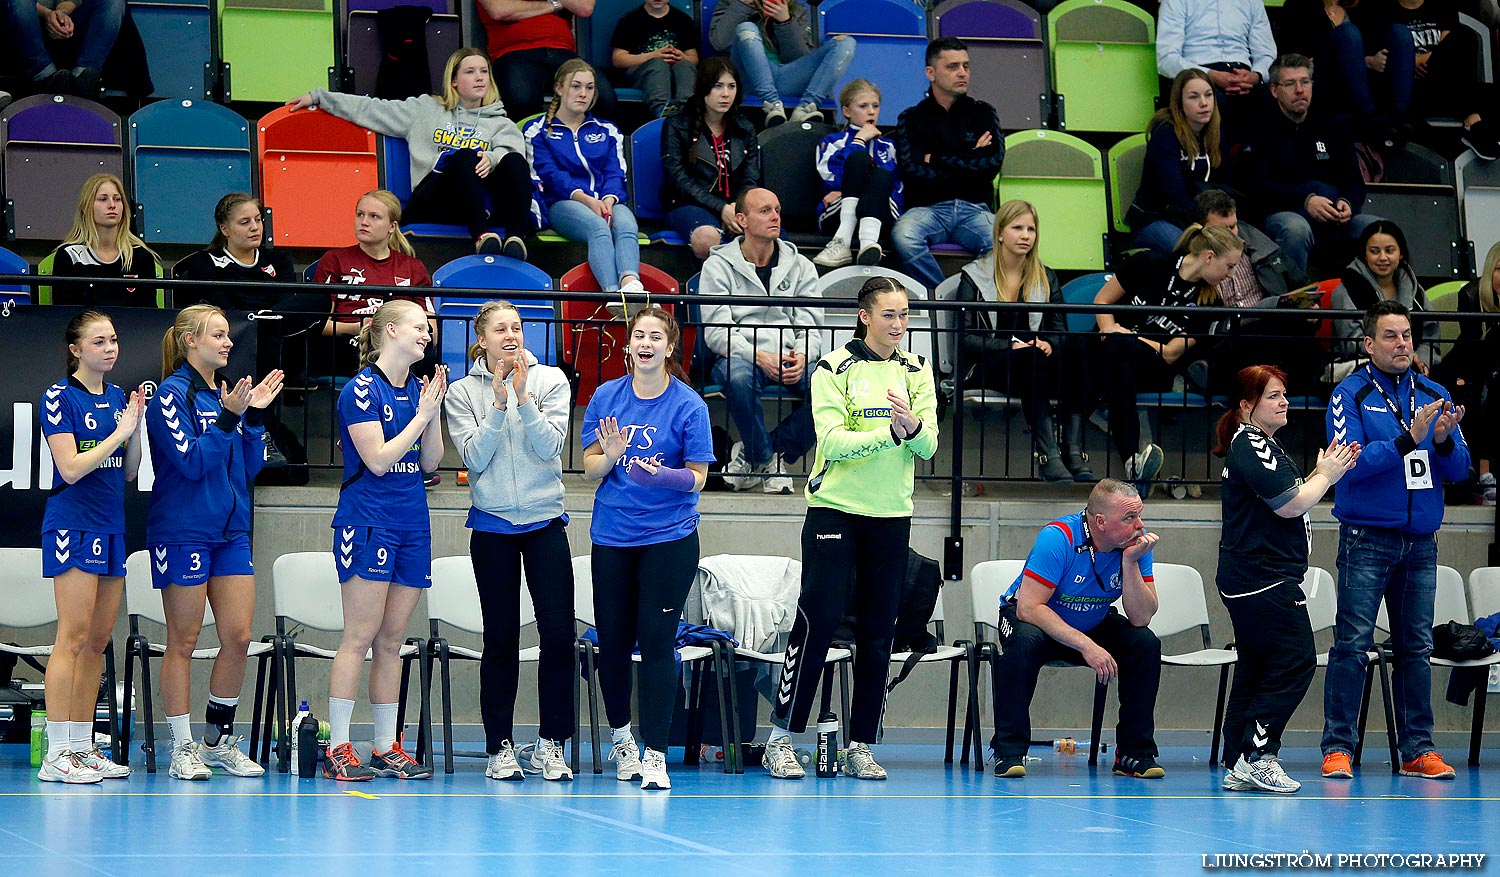 Ungdoms-SM Steg 5 Damjuniorer SM-FINAL Team Stockholm HF-Lugi HF 21-10,dam,Idrottshuset,Jönköping,Sverige,USM Steg 5 2014,Ungdoms-SM,2014,84374